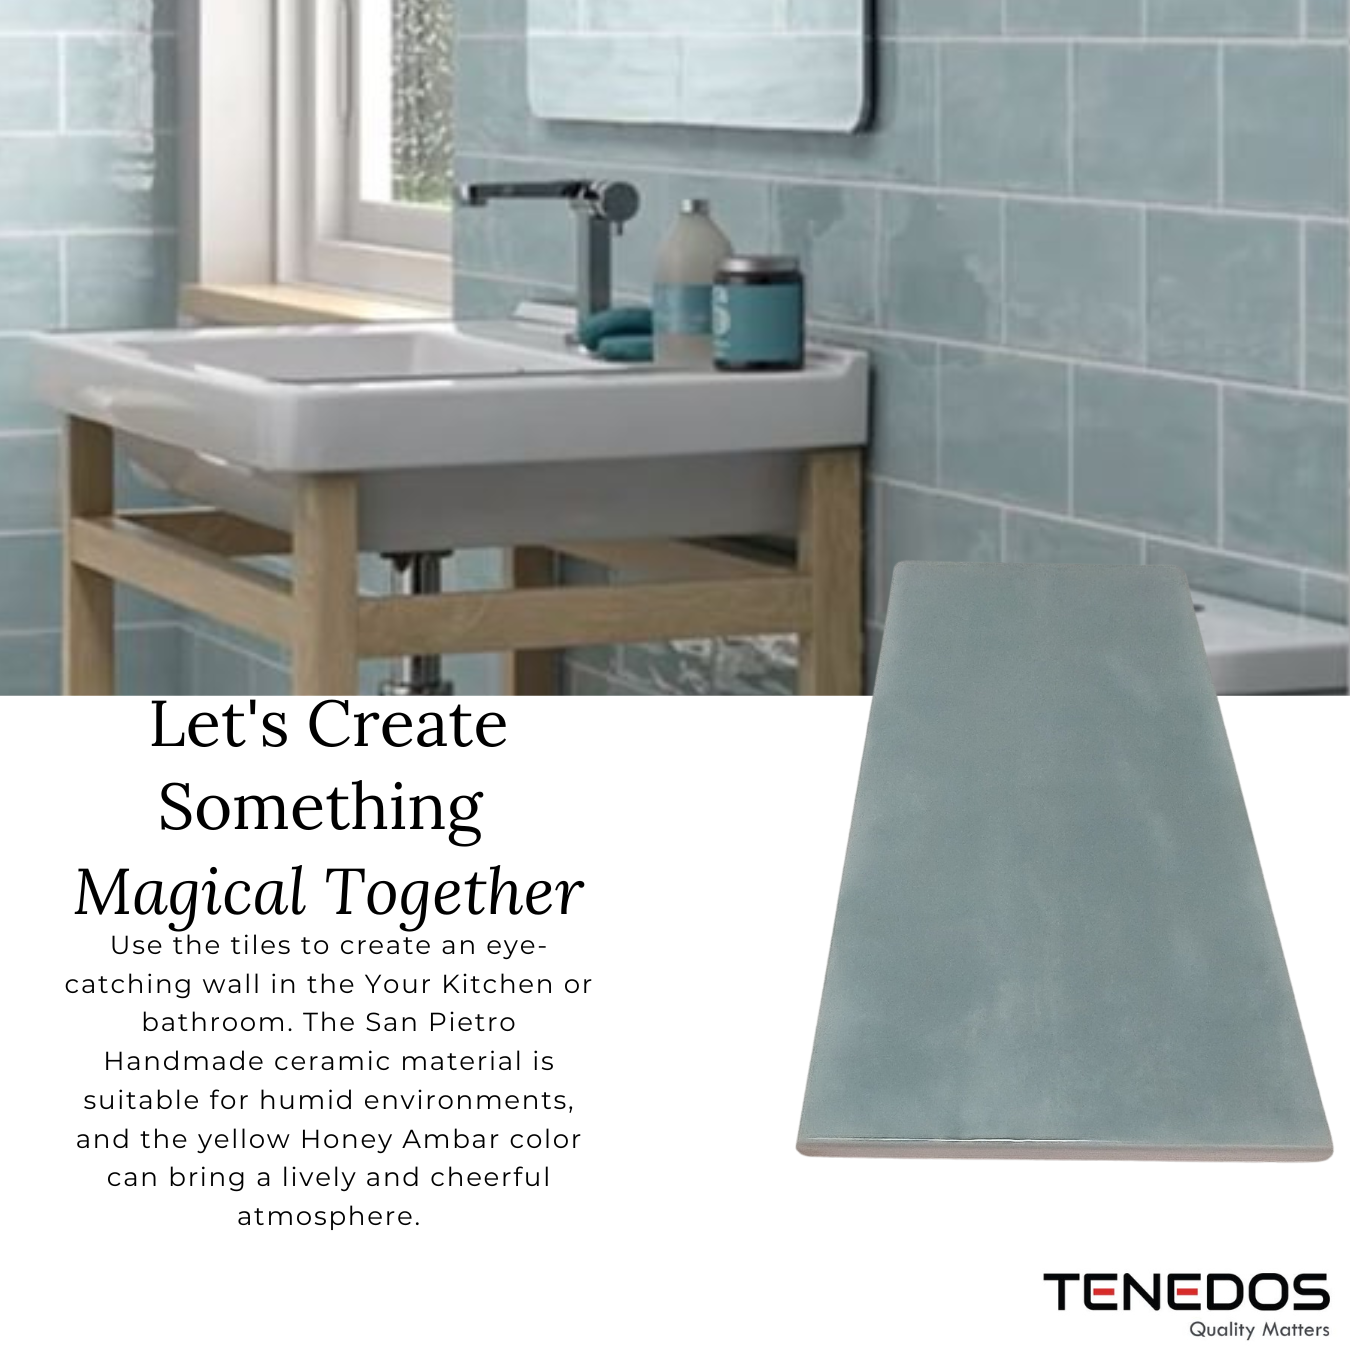 TRCD-MLC-4X10 Santorini Blue Gray 4 1/4x10 Glossy Ceramic Wall Tile Backsplash for Kitchen, Bathroom, Fireplace, Accent Decor